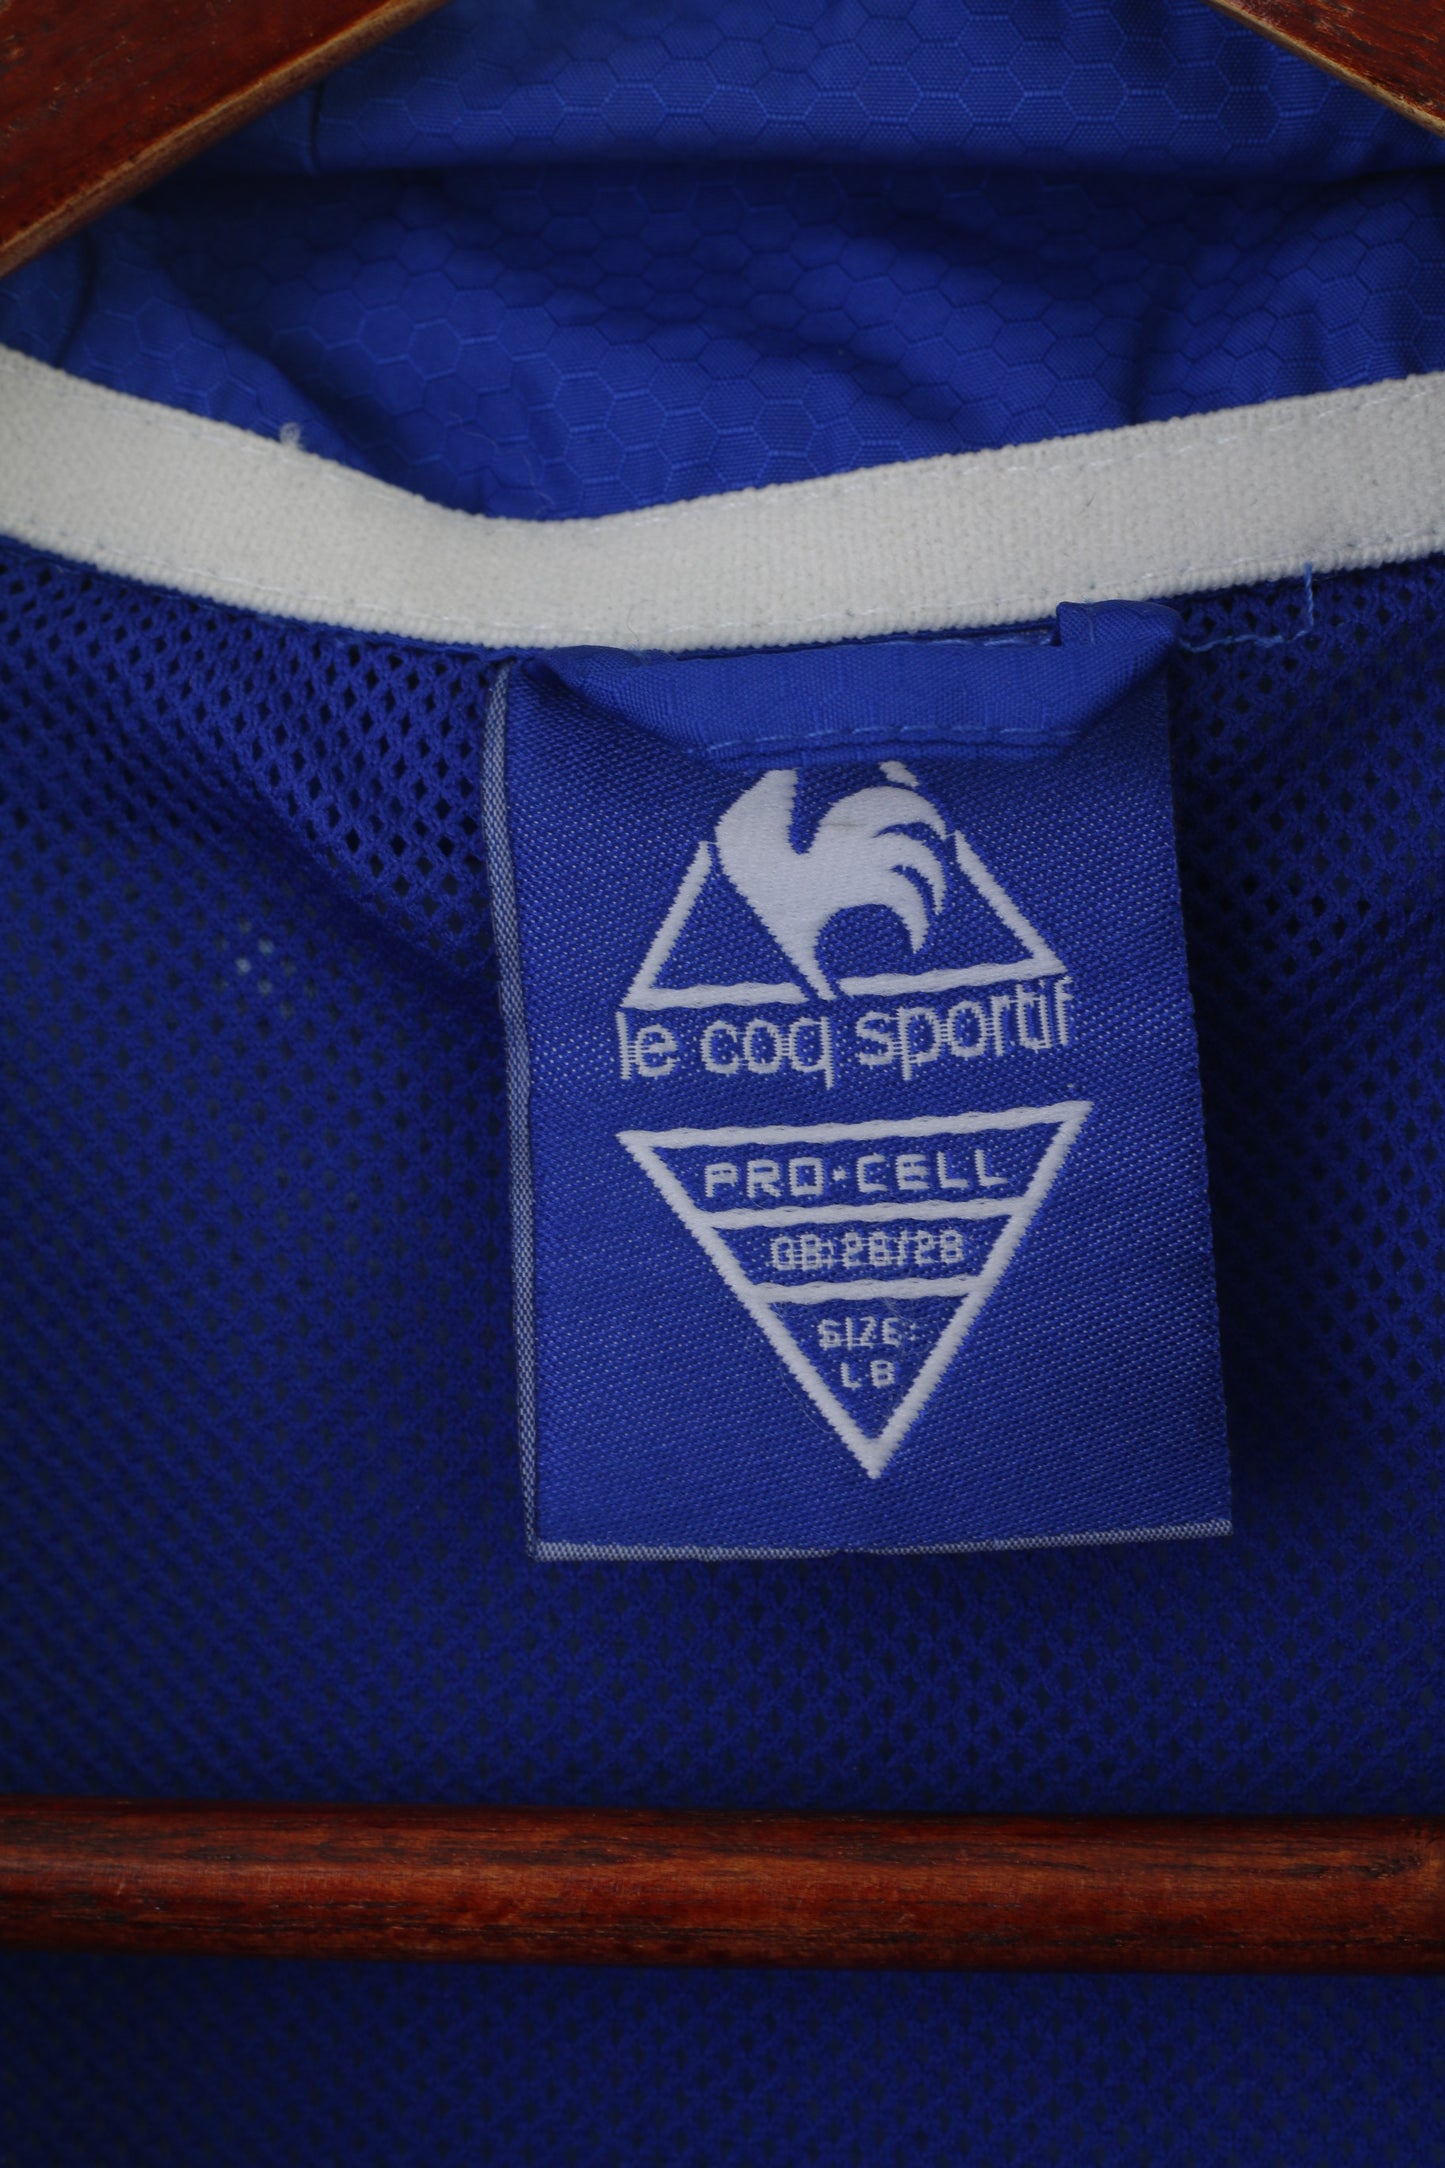 Giacca Le Coq Sportif Boys LB 8-10 Age Blu Calcio Evertoon Sportswear Pro Cell Top